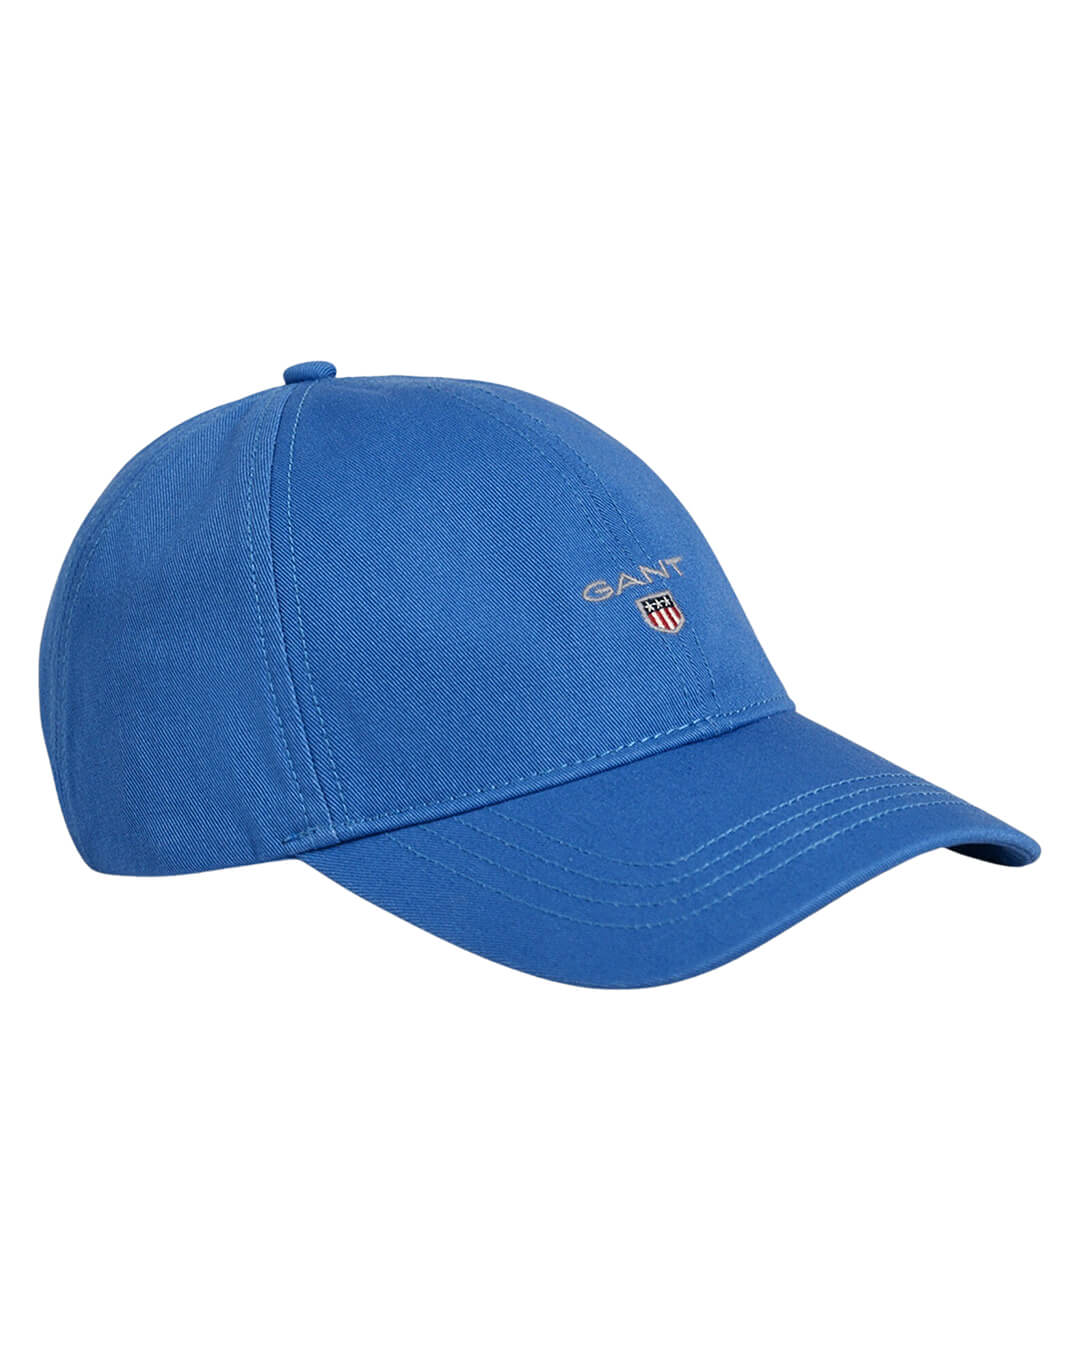 Gant Caps One Size Gant Cotton Twill Blue Cap